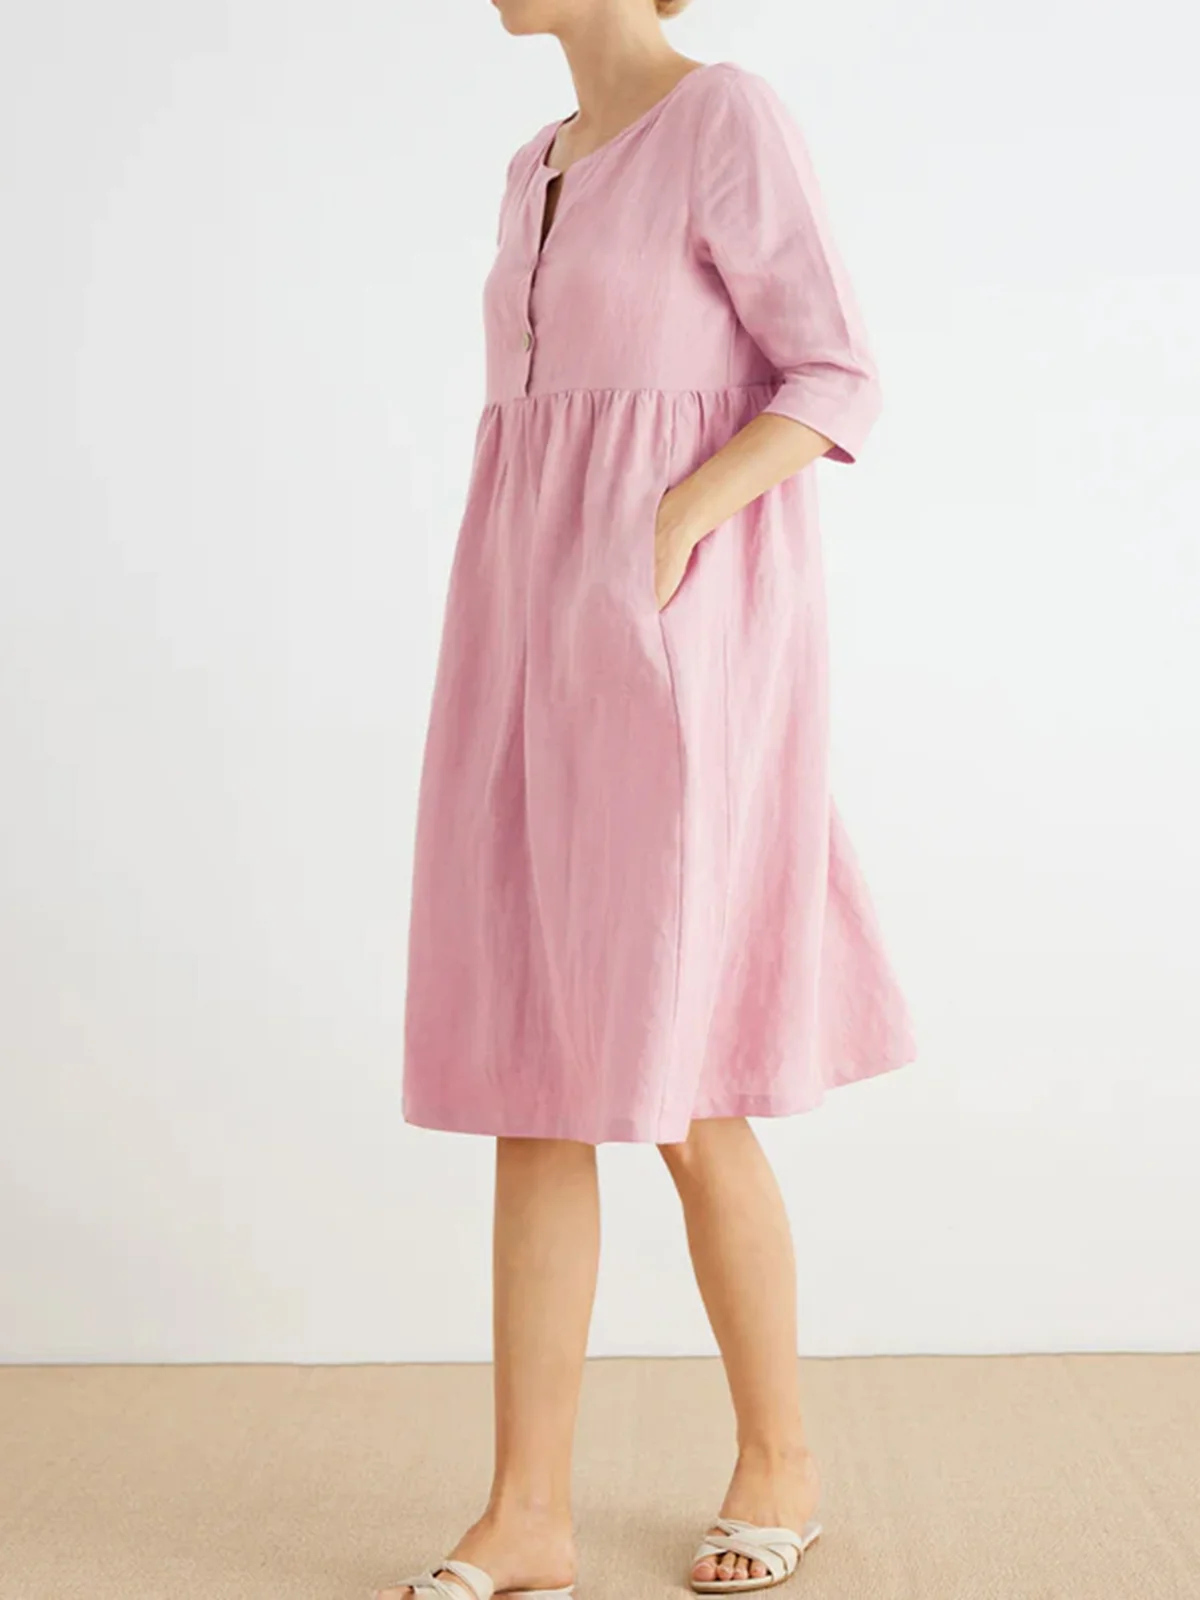 Linen Plain Casual Dress With No